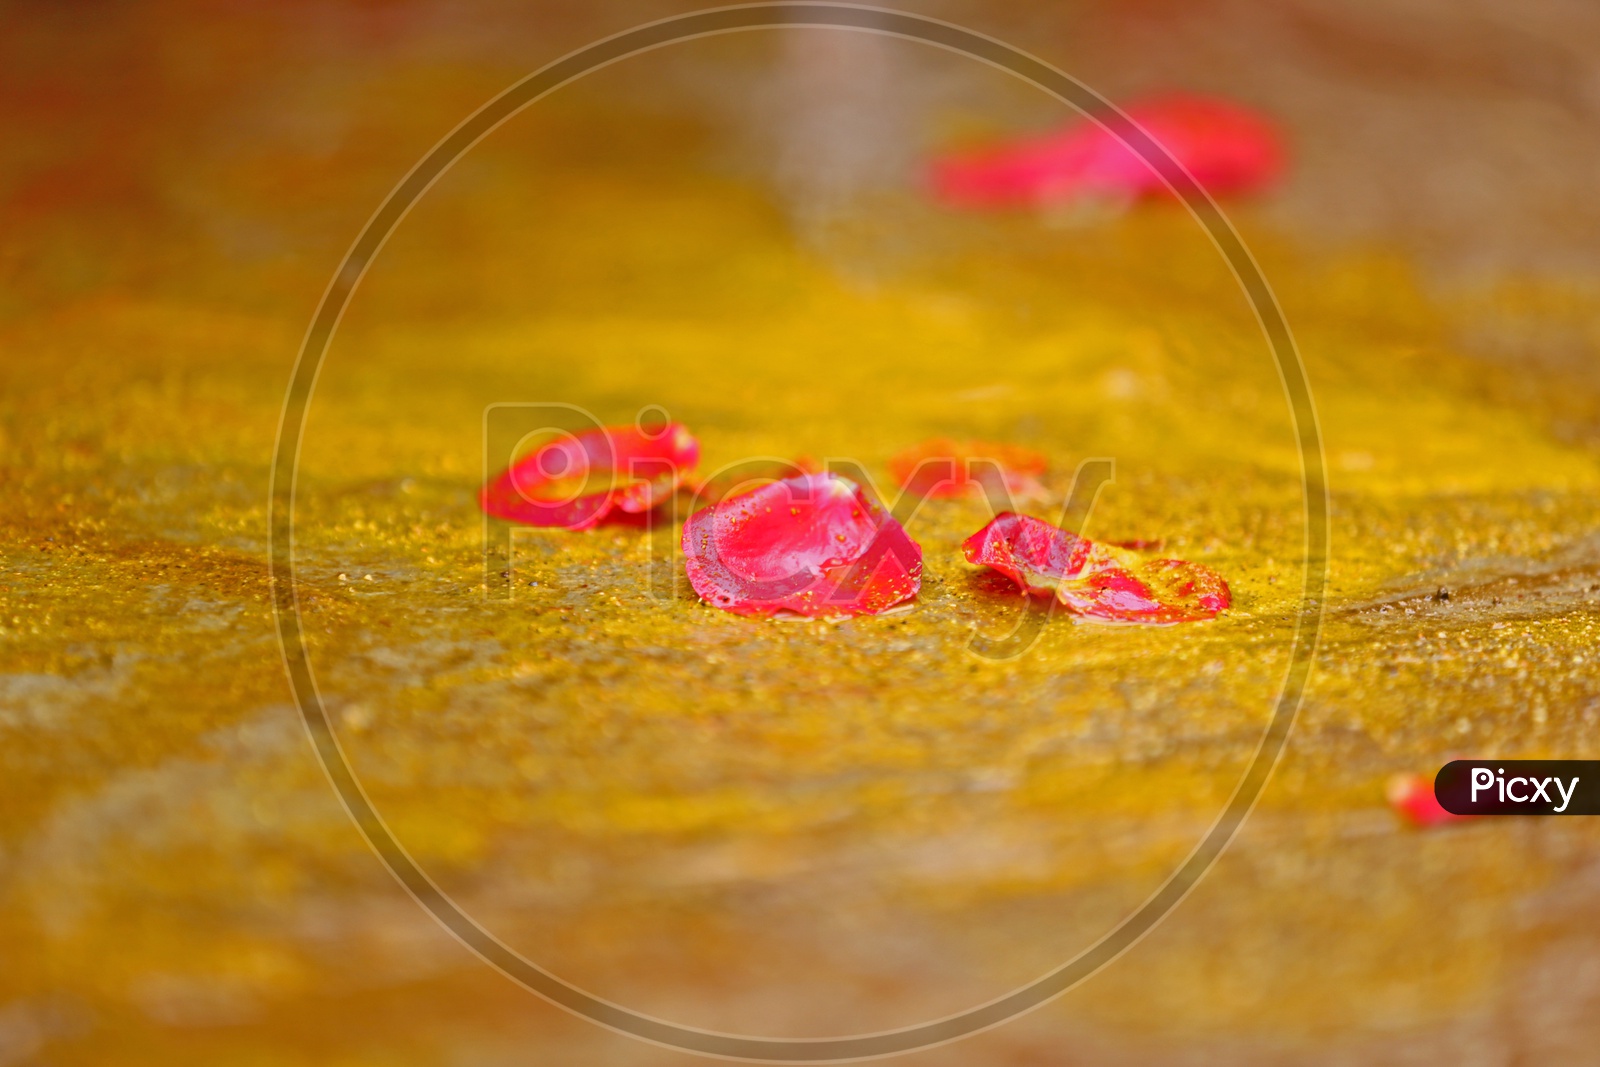 Rose petals Closeup Shots With Termeric in Background / Hindu Traditional Wedding shots